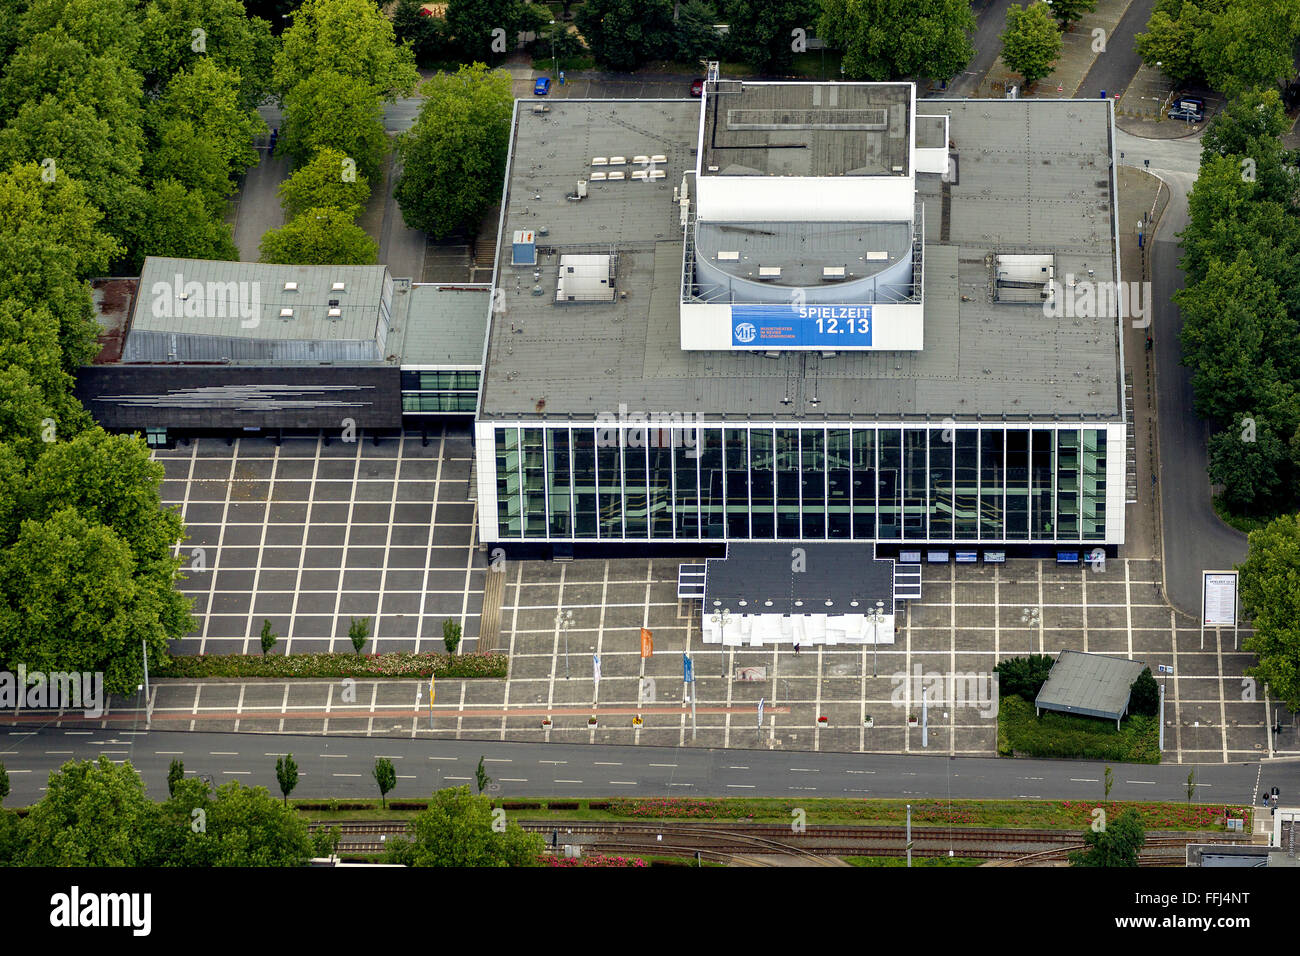 Aerial view, musical theater Gelsenkirchen, Gelsenkirchen, Ruhr area, North Rhine-Westphalia, Germany, Europe, Aerial view, Stock Photo